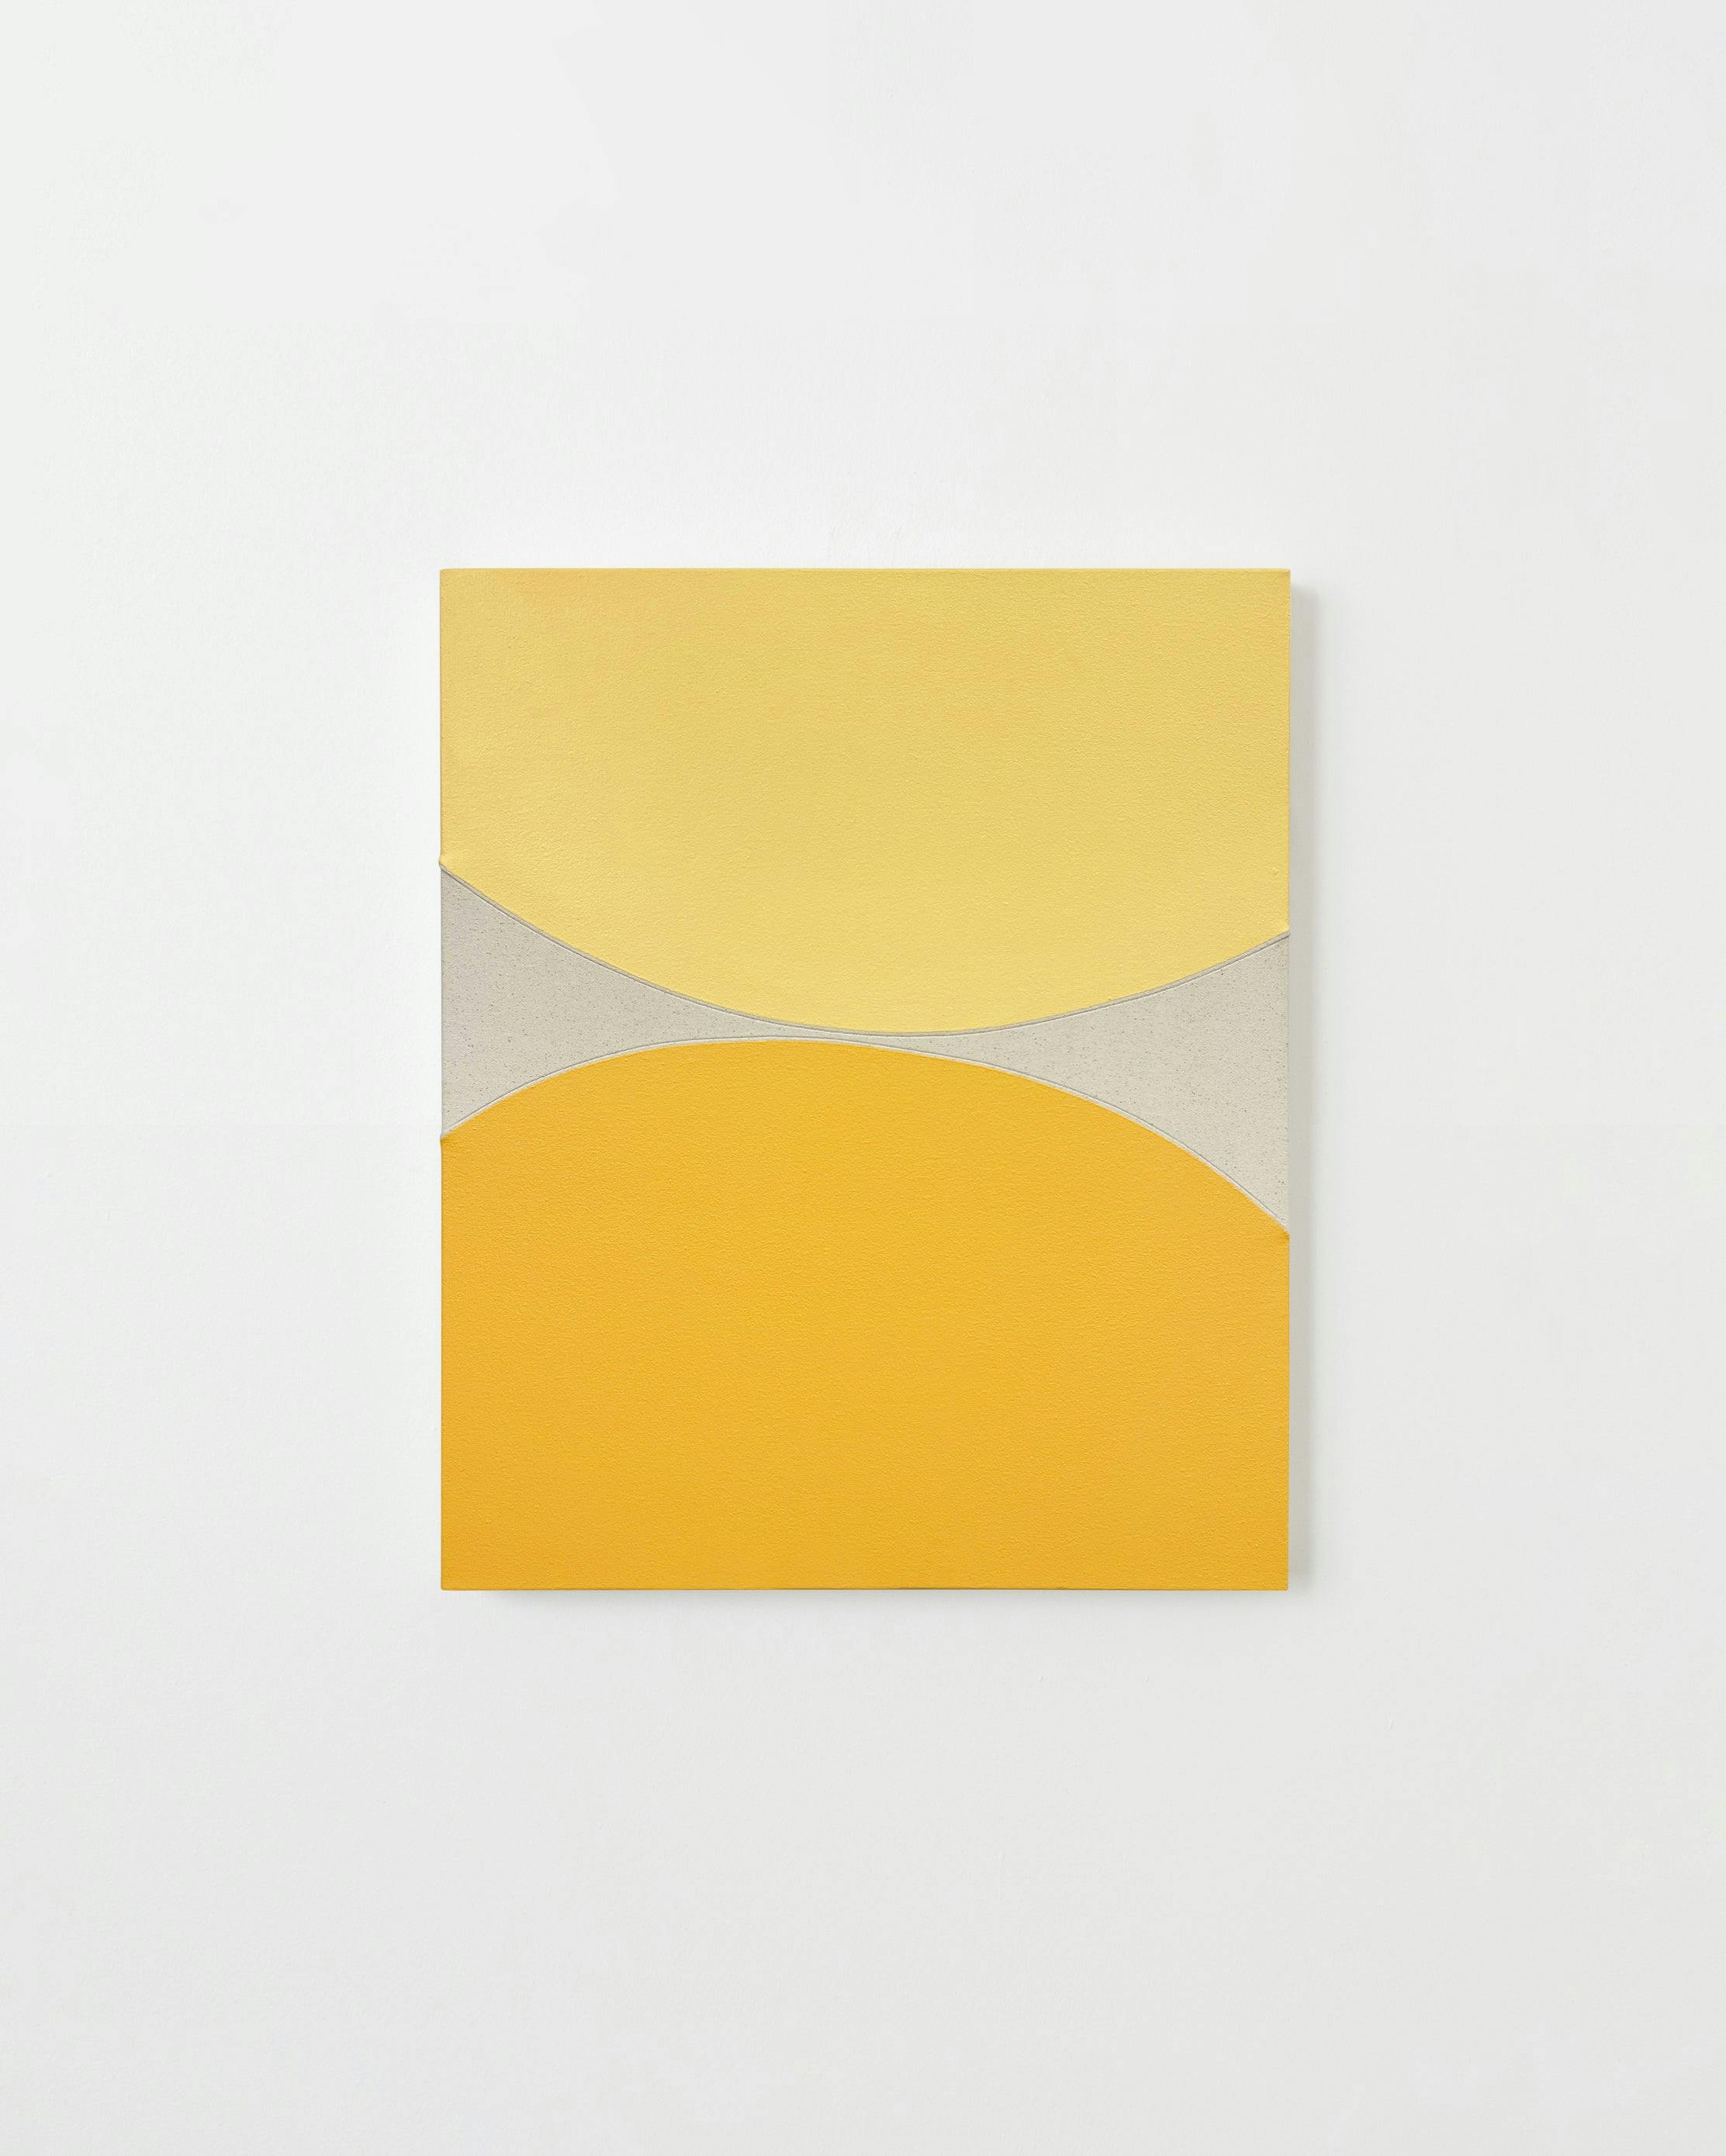 Hyun Jung Ahn - Rendezvous Yellow Moons - Painting